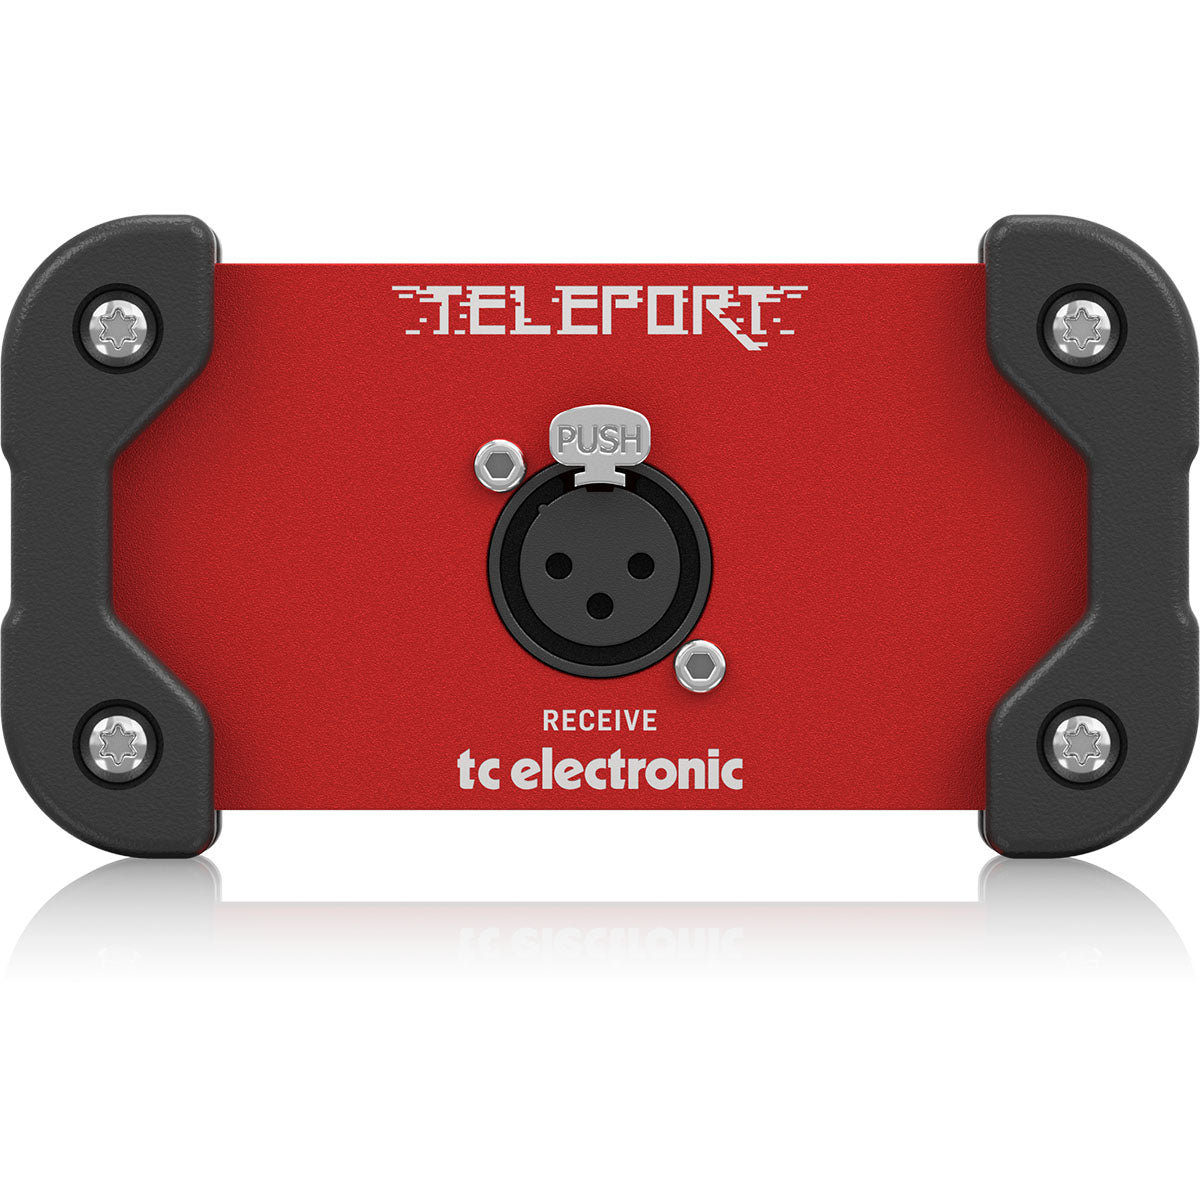 TC Electronic GLR Teleport High-Performance Active Guitar Signal Receiver